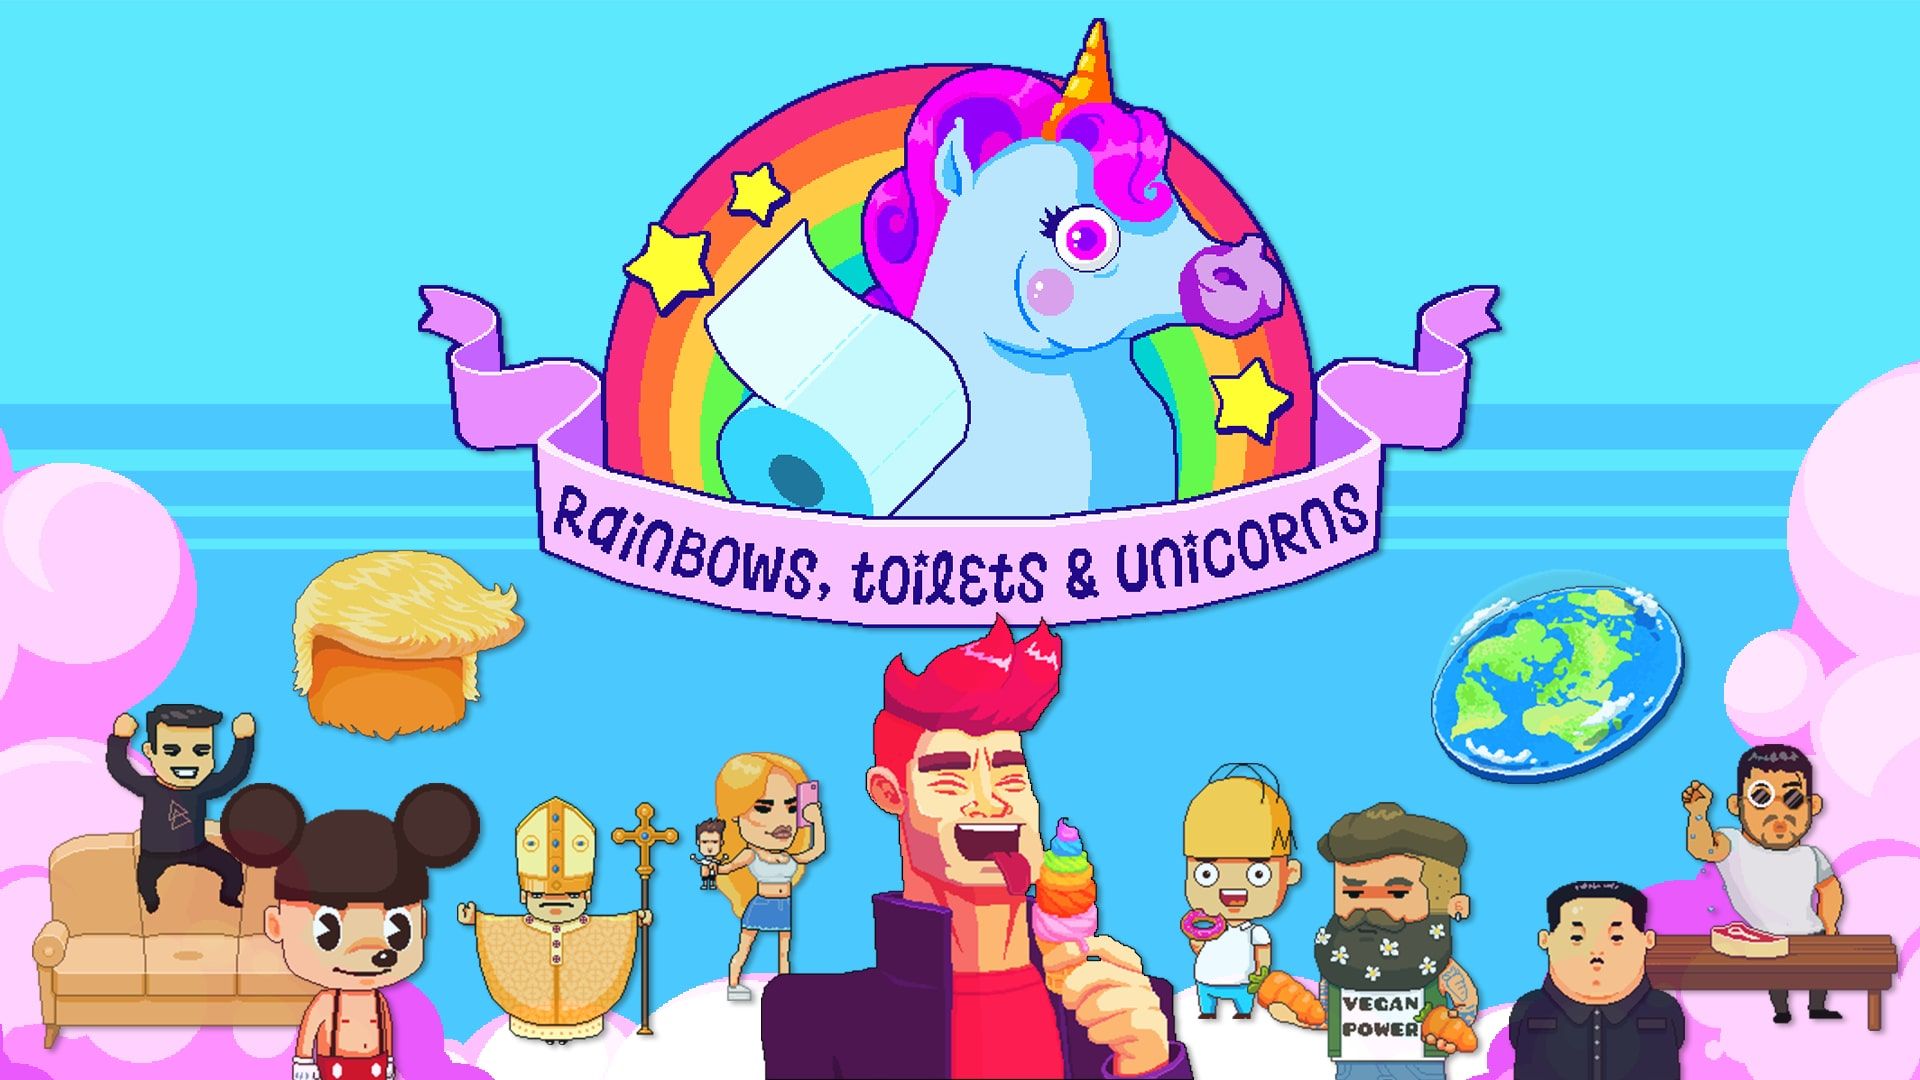 Rainbows, toilets & unicorns cover image